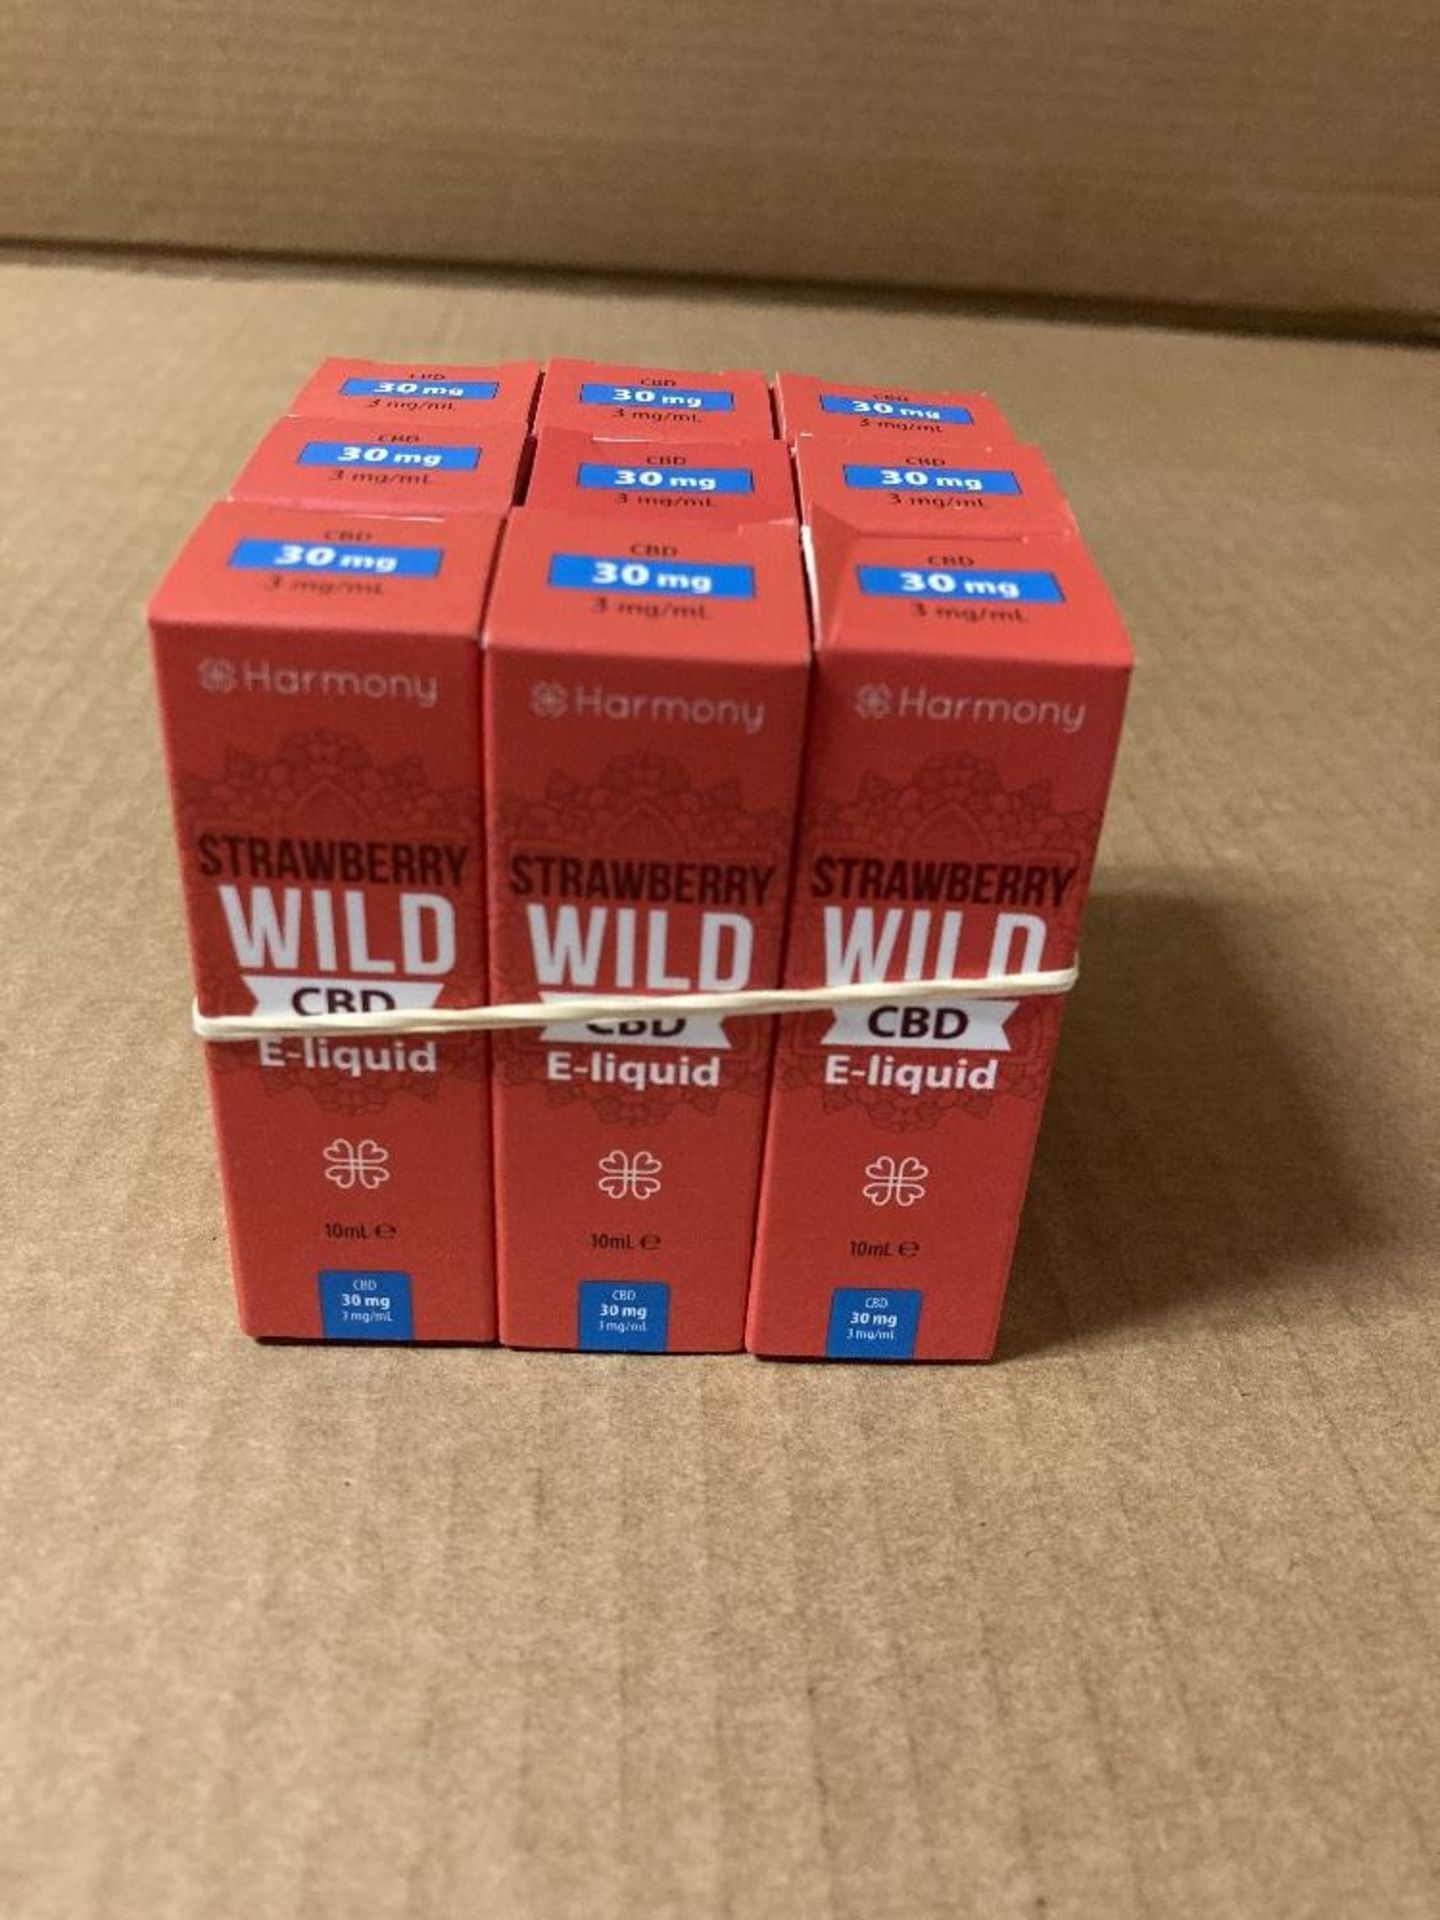 (9) 10ML Harmony Strawberry Wild CBD E-liquid, 30mg CBD